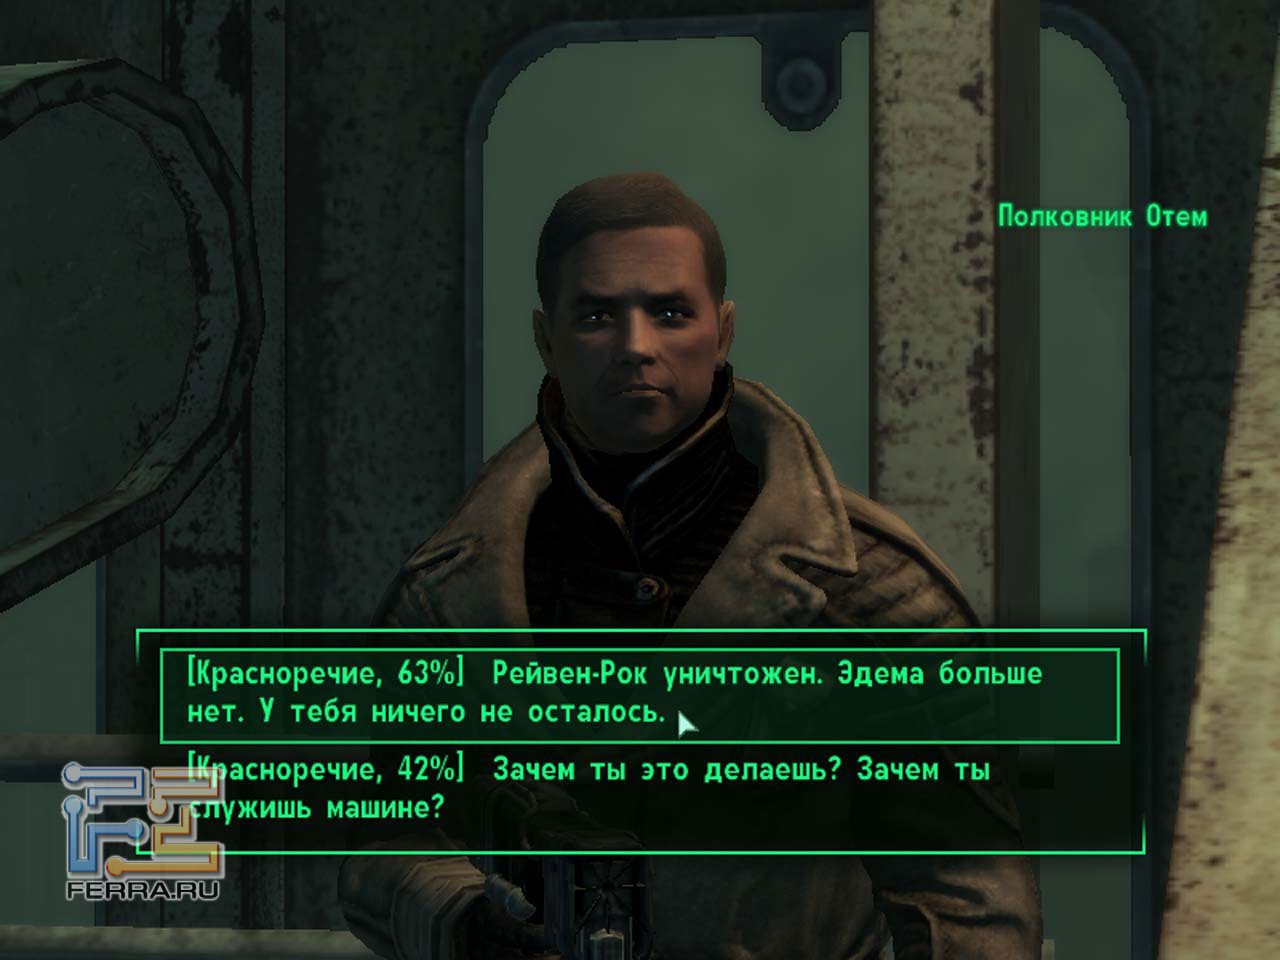 Fallout как поменять язык на русский. Полковник Отем Fallout 3. Fallout диалог красноречие. Fallout 3 красноречие. Диалоги фоллаут 3 красноречие.